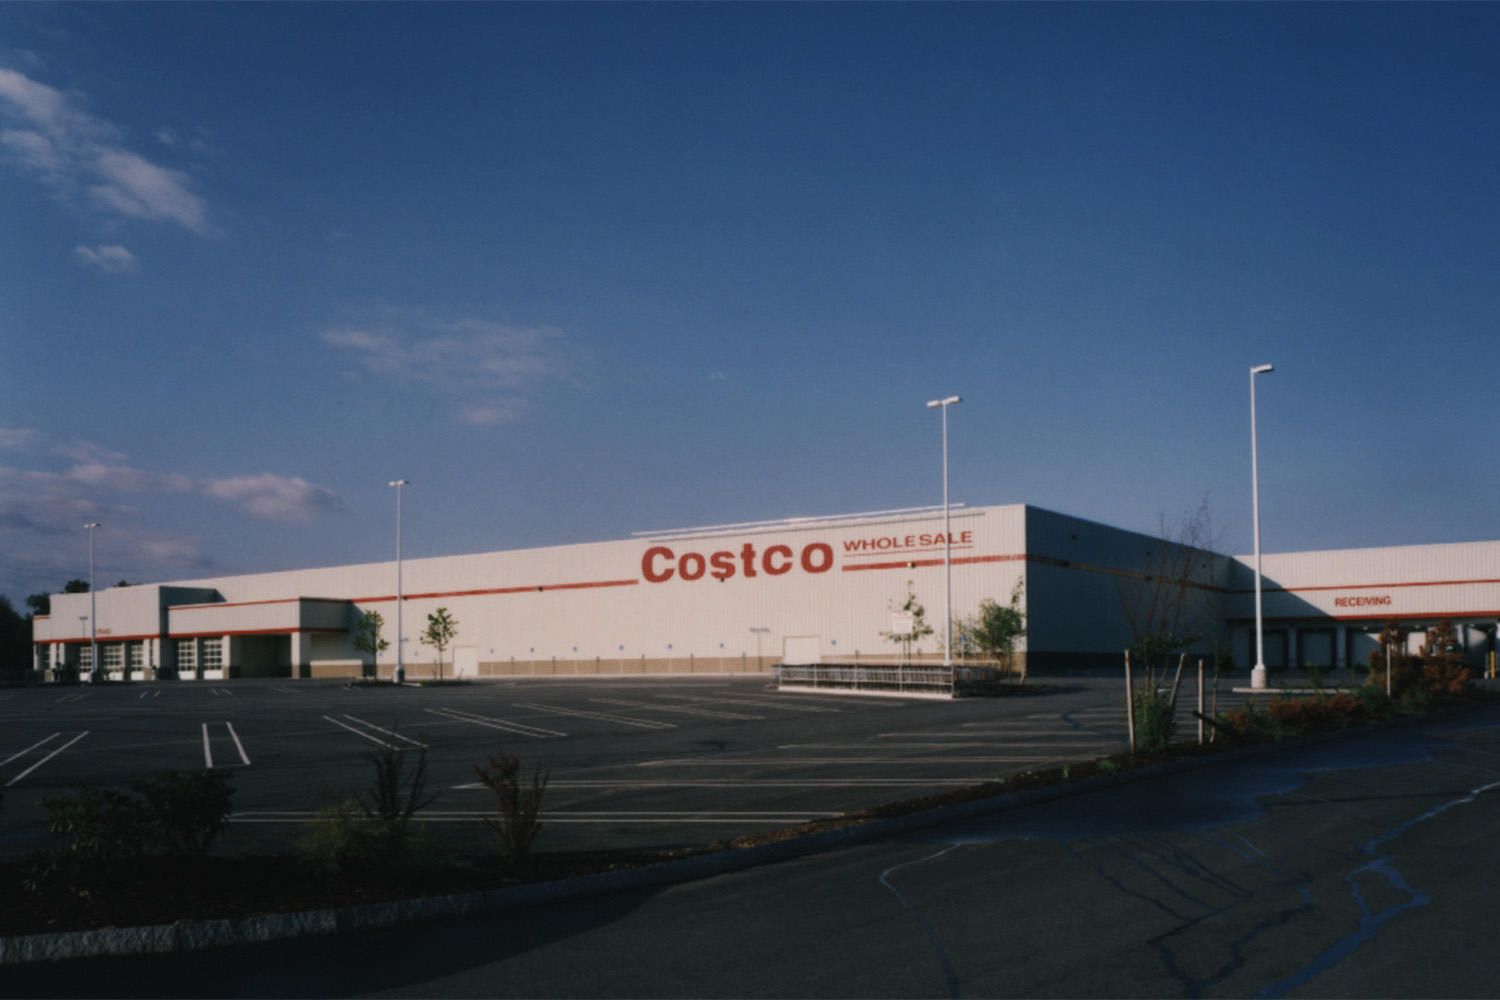 Daytime exterior of Costco